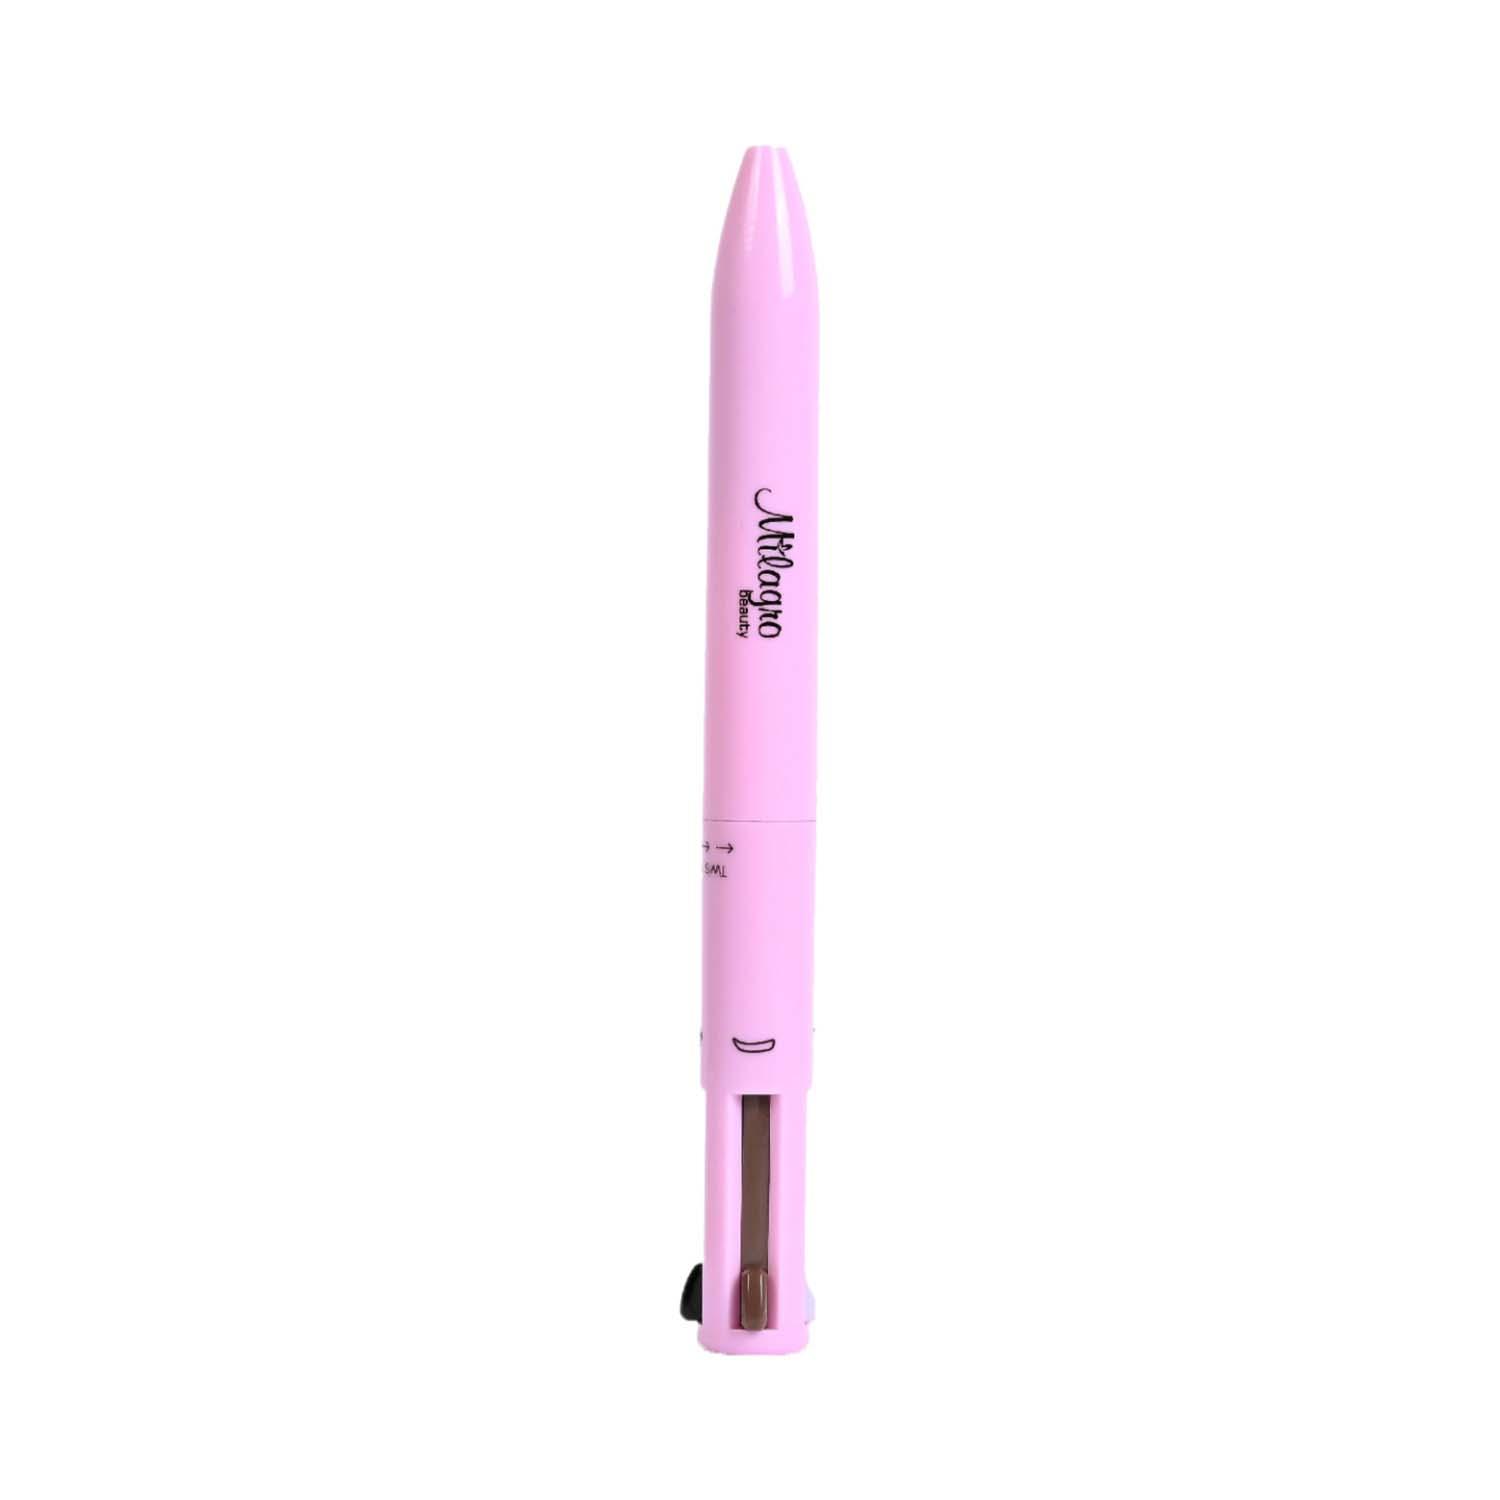 Tint Cosmetics | Tint Cosmetics 4 in 1 Makeup Pen Eyeliner for Highlighter, Lip Liner & Eyebrow - Pronto Pink (8 g)